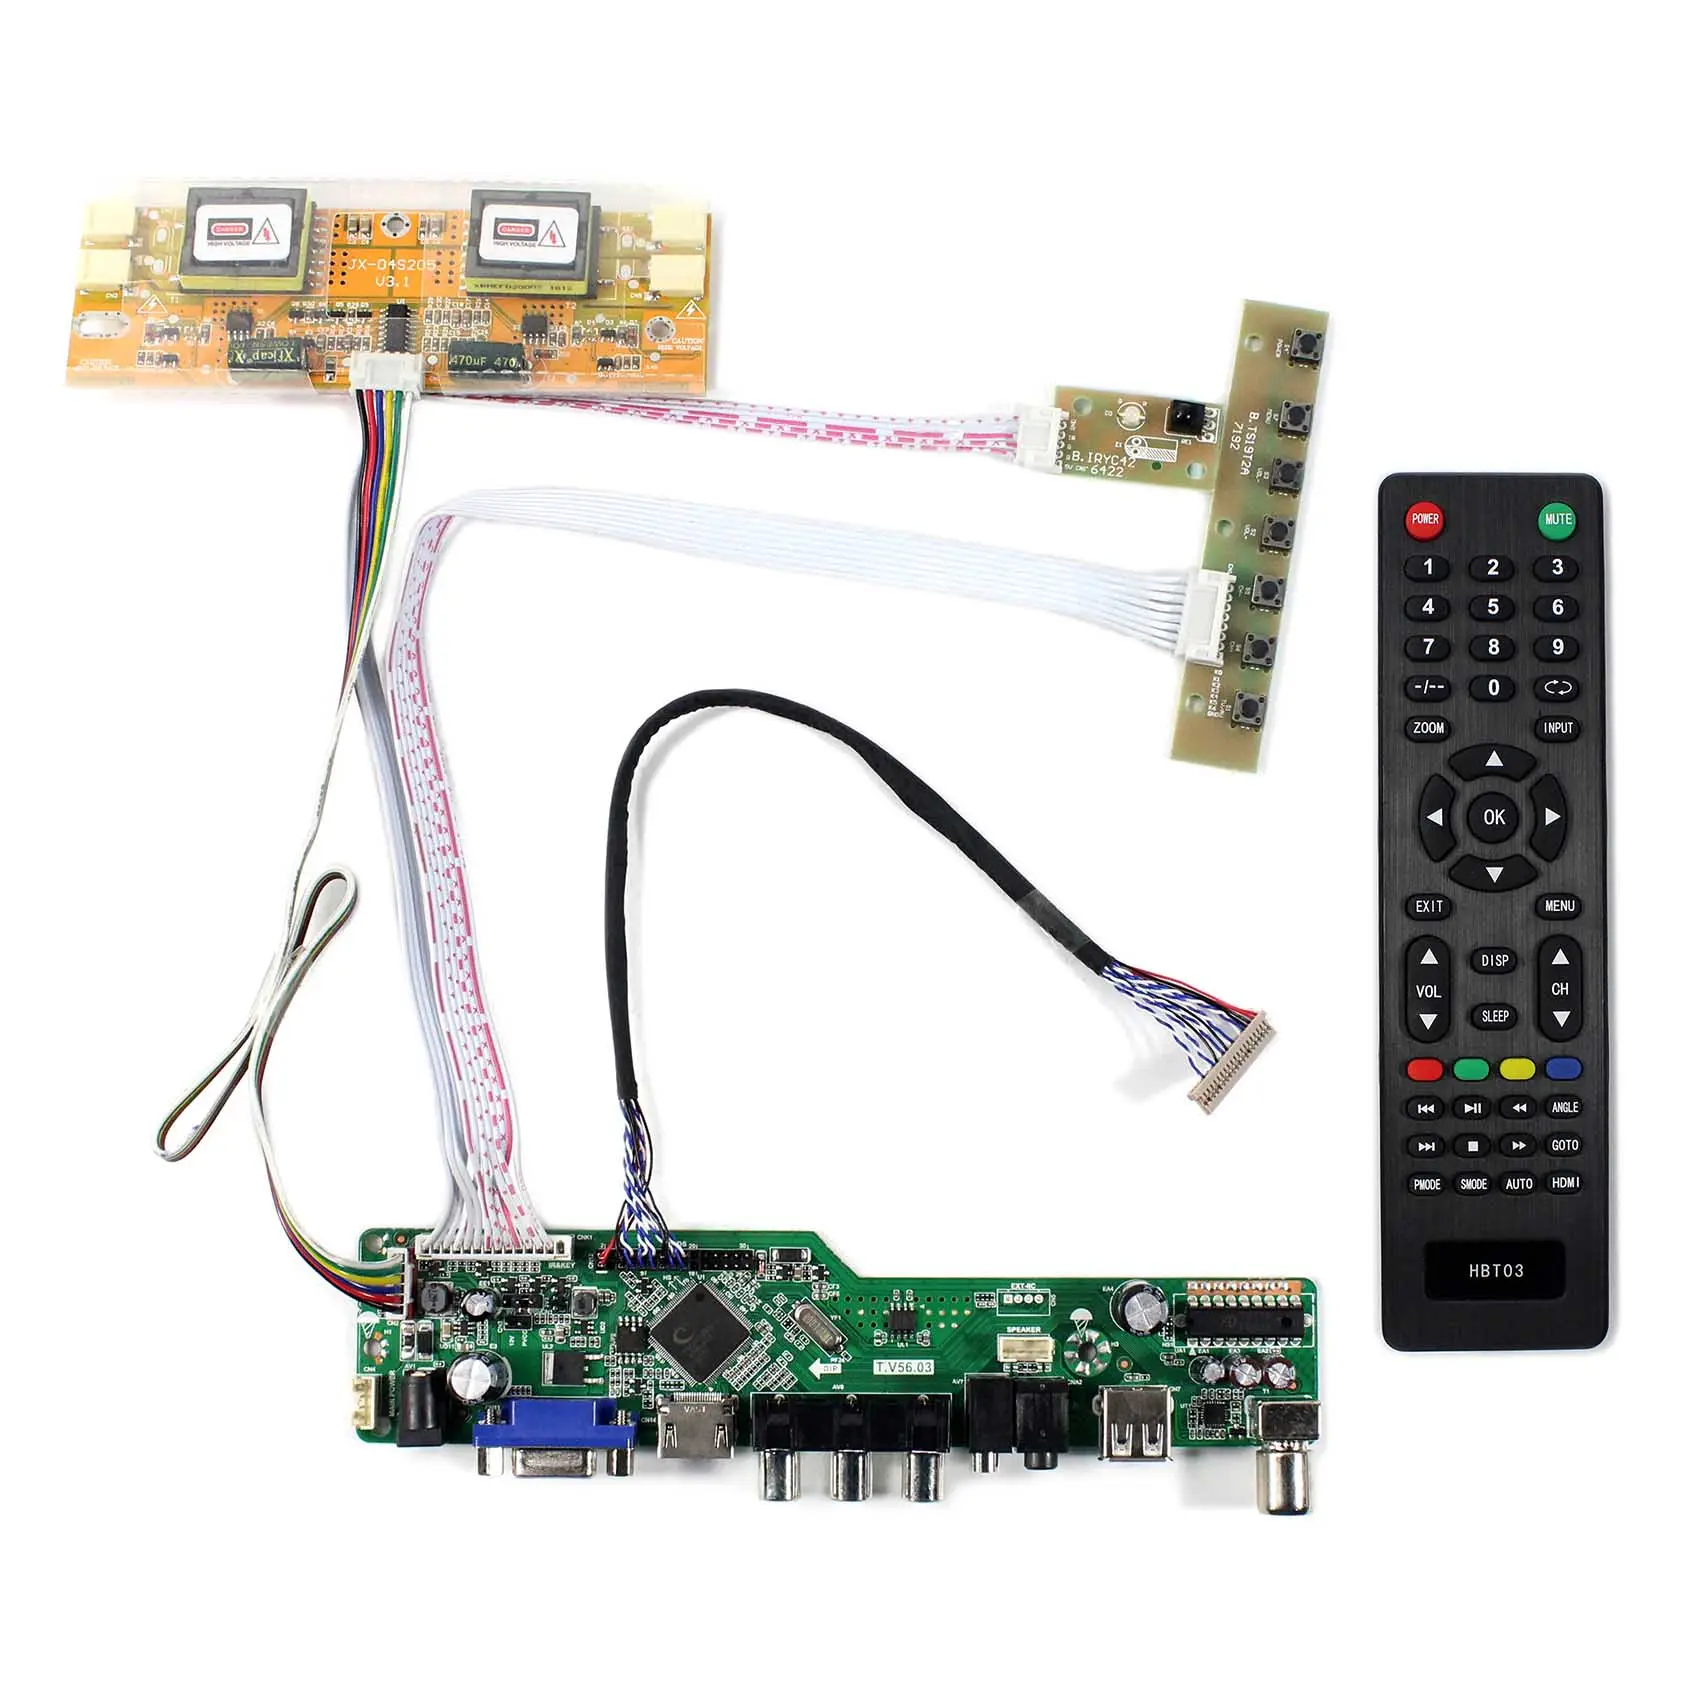 HD MI VGA AV USB RF LCD لوحة رئيسية تلفزيون عالمي لوحة تحكم TV56.03 لشاشة lcd 1024X768 15 بوصة